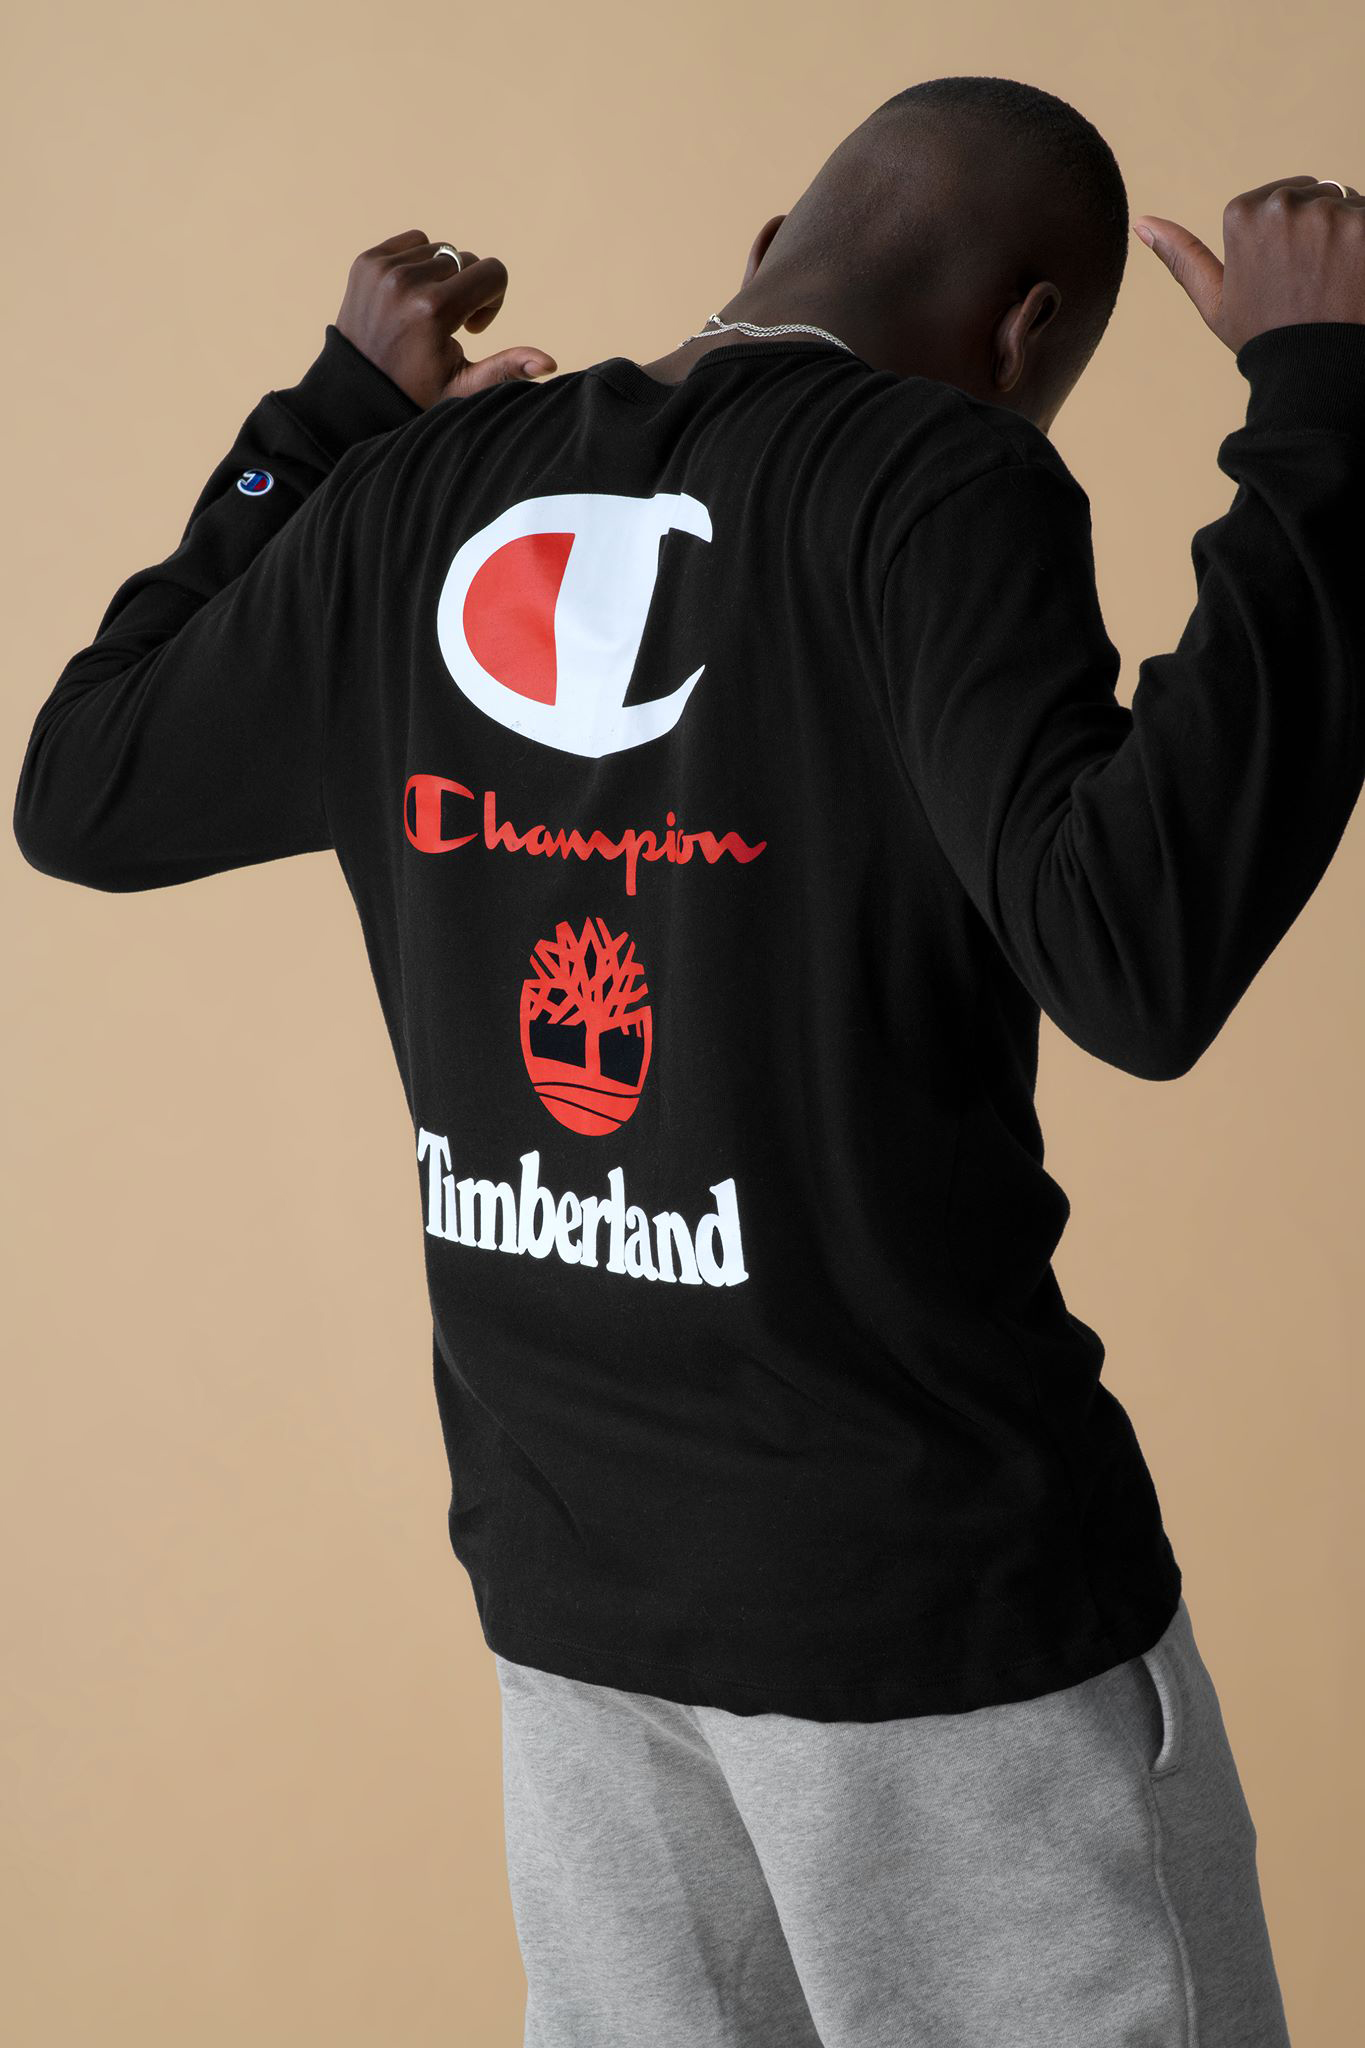 timberland champion long sleeve